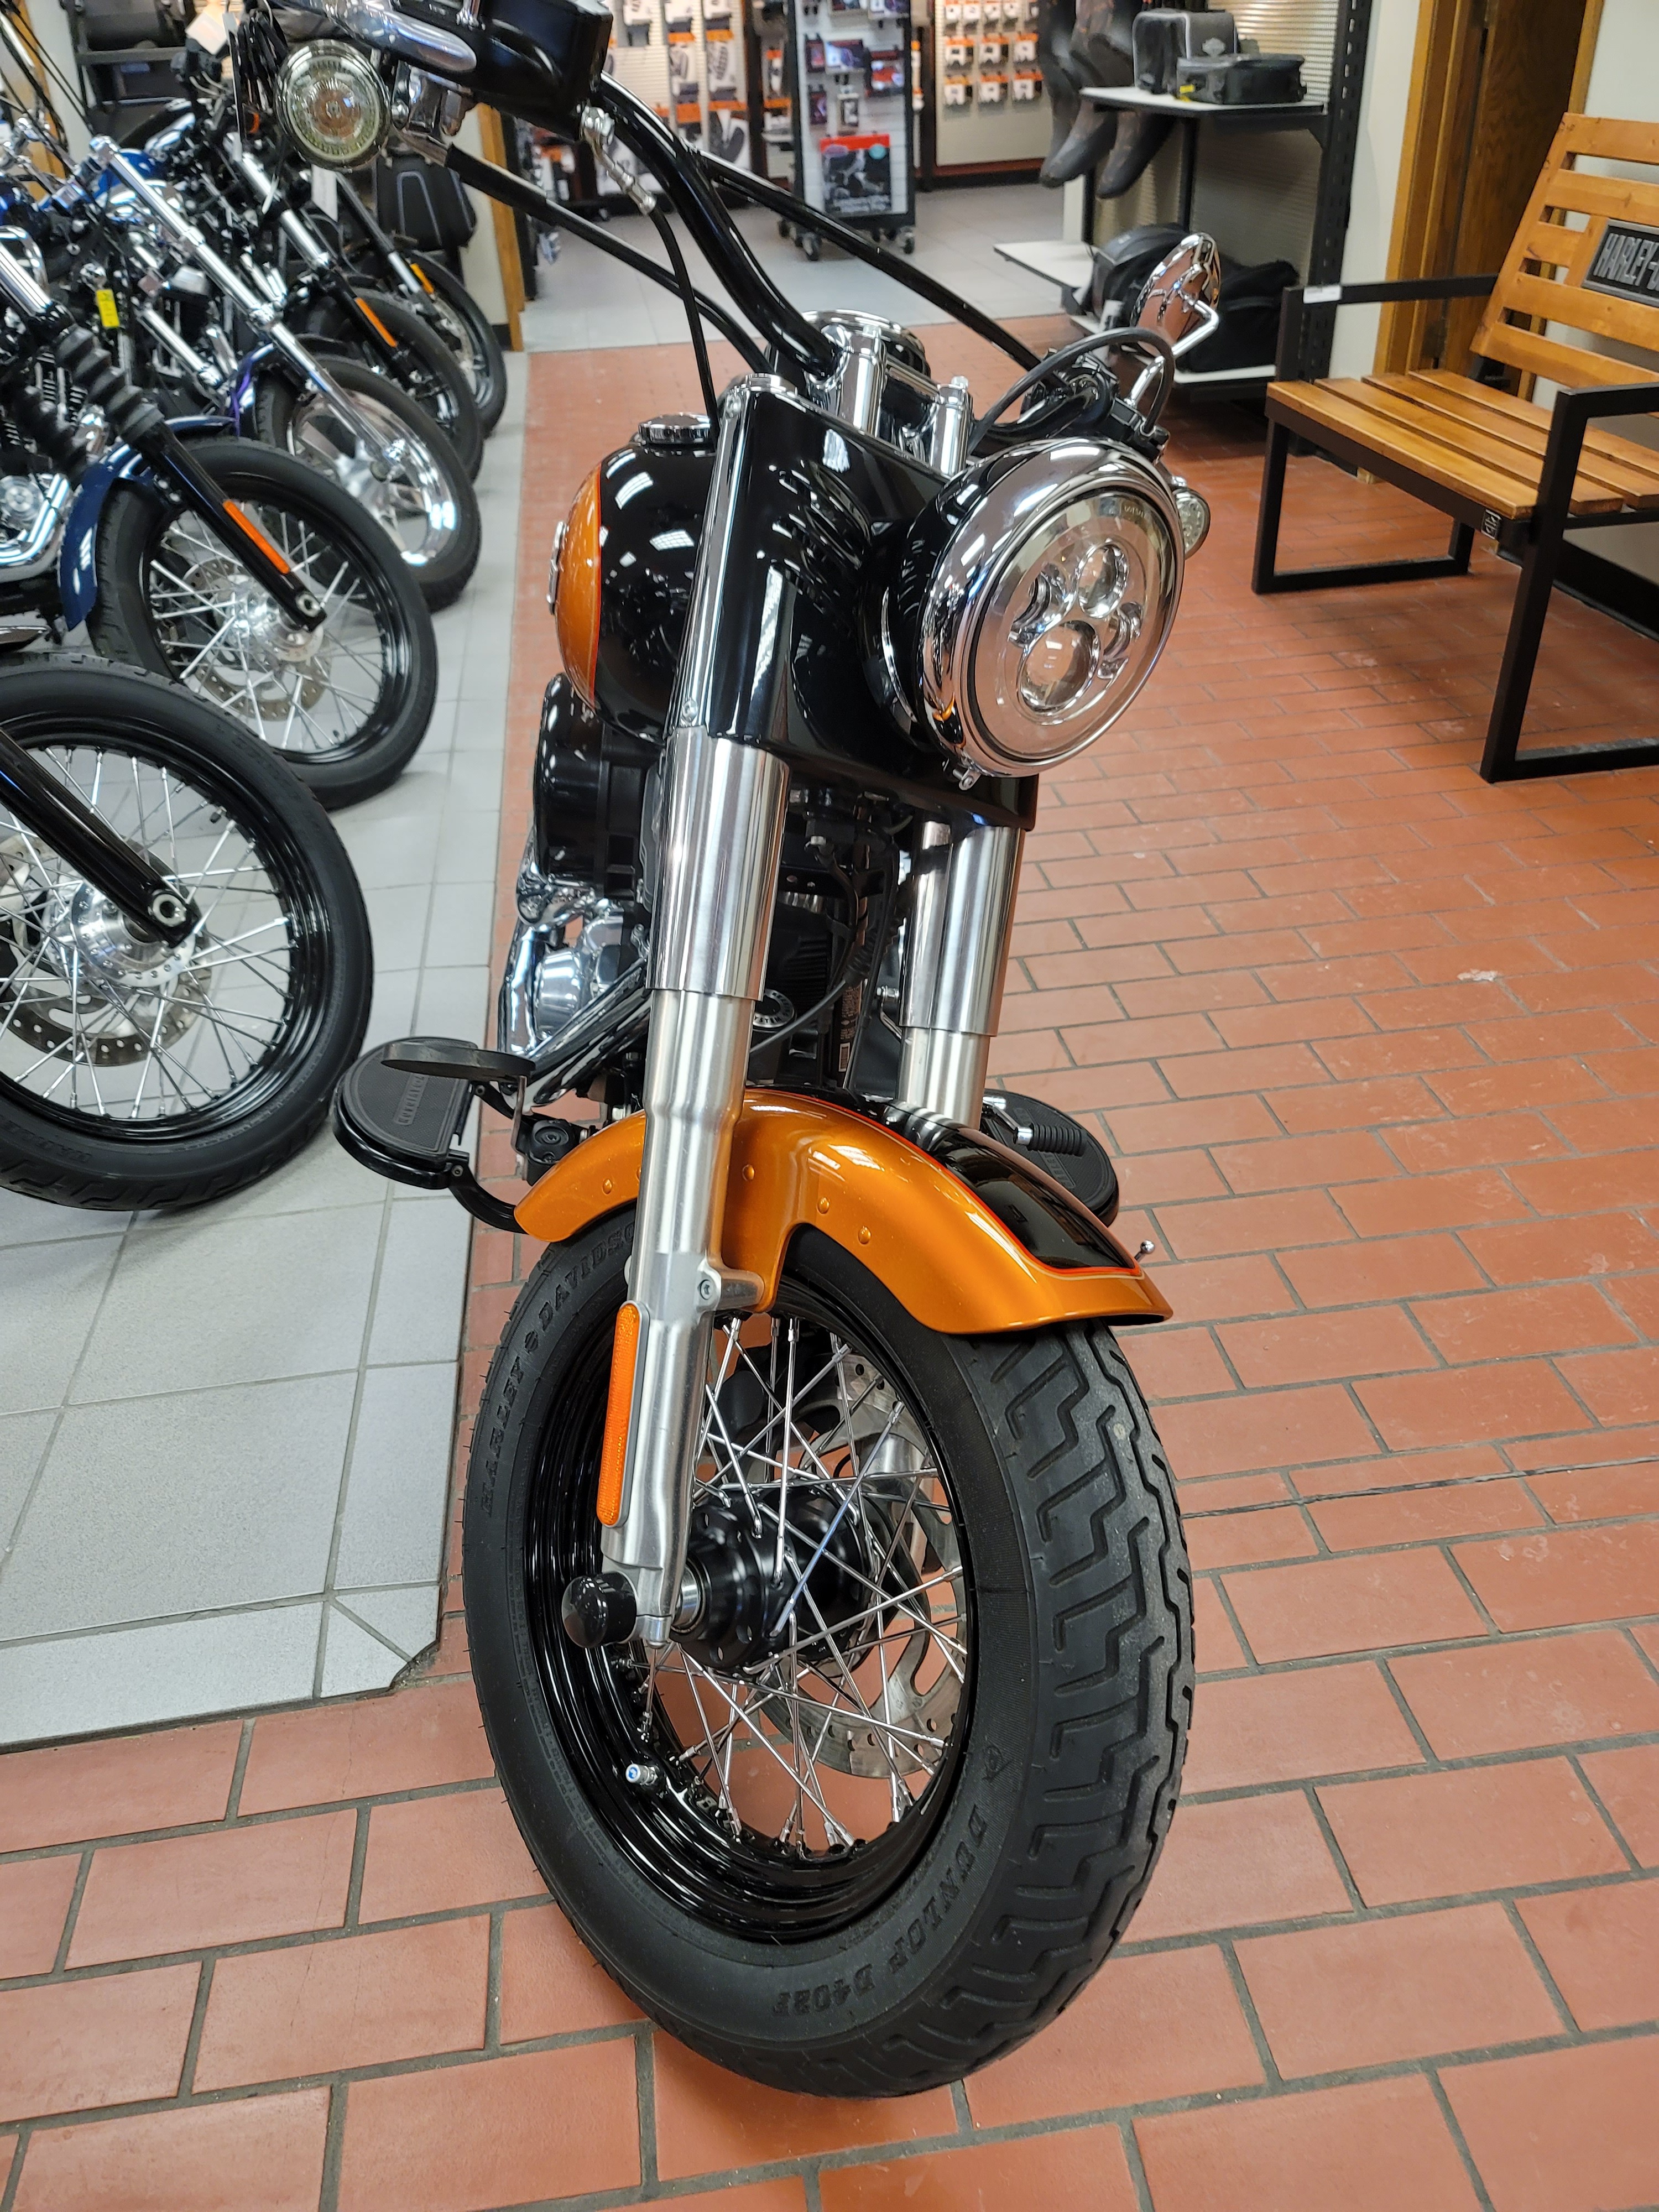 2015 Harley-Davidson Softail Slim at Rooster's Harley Davidson